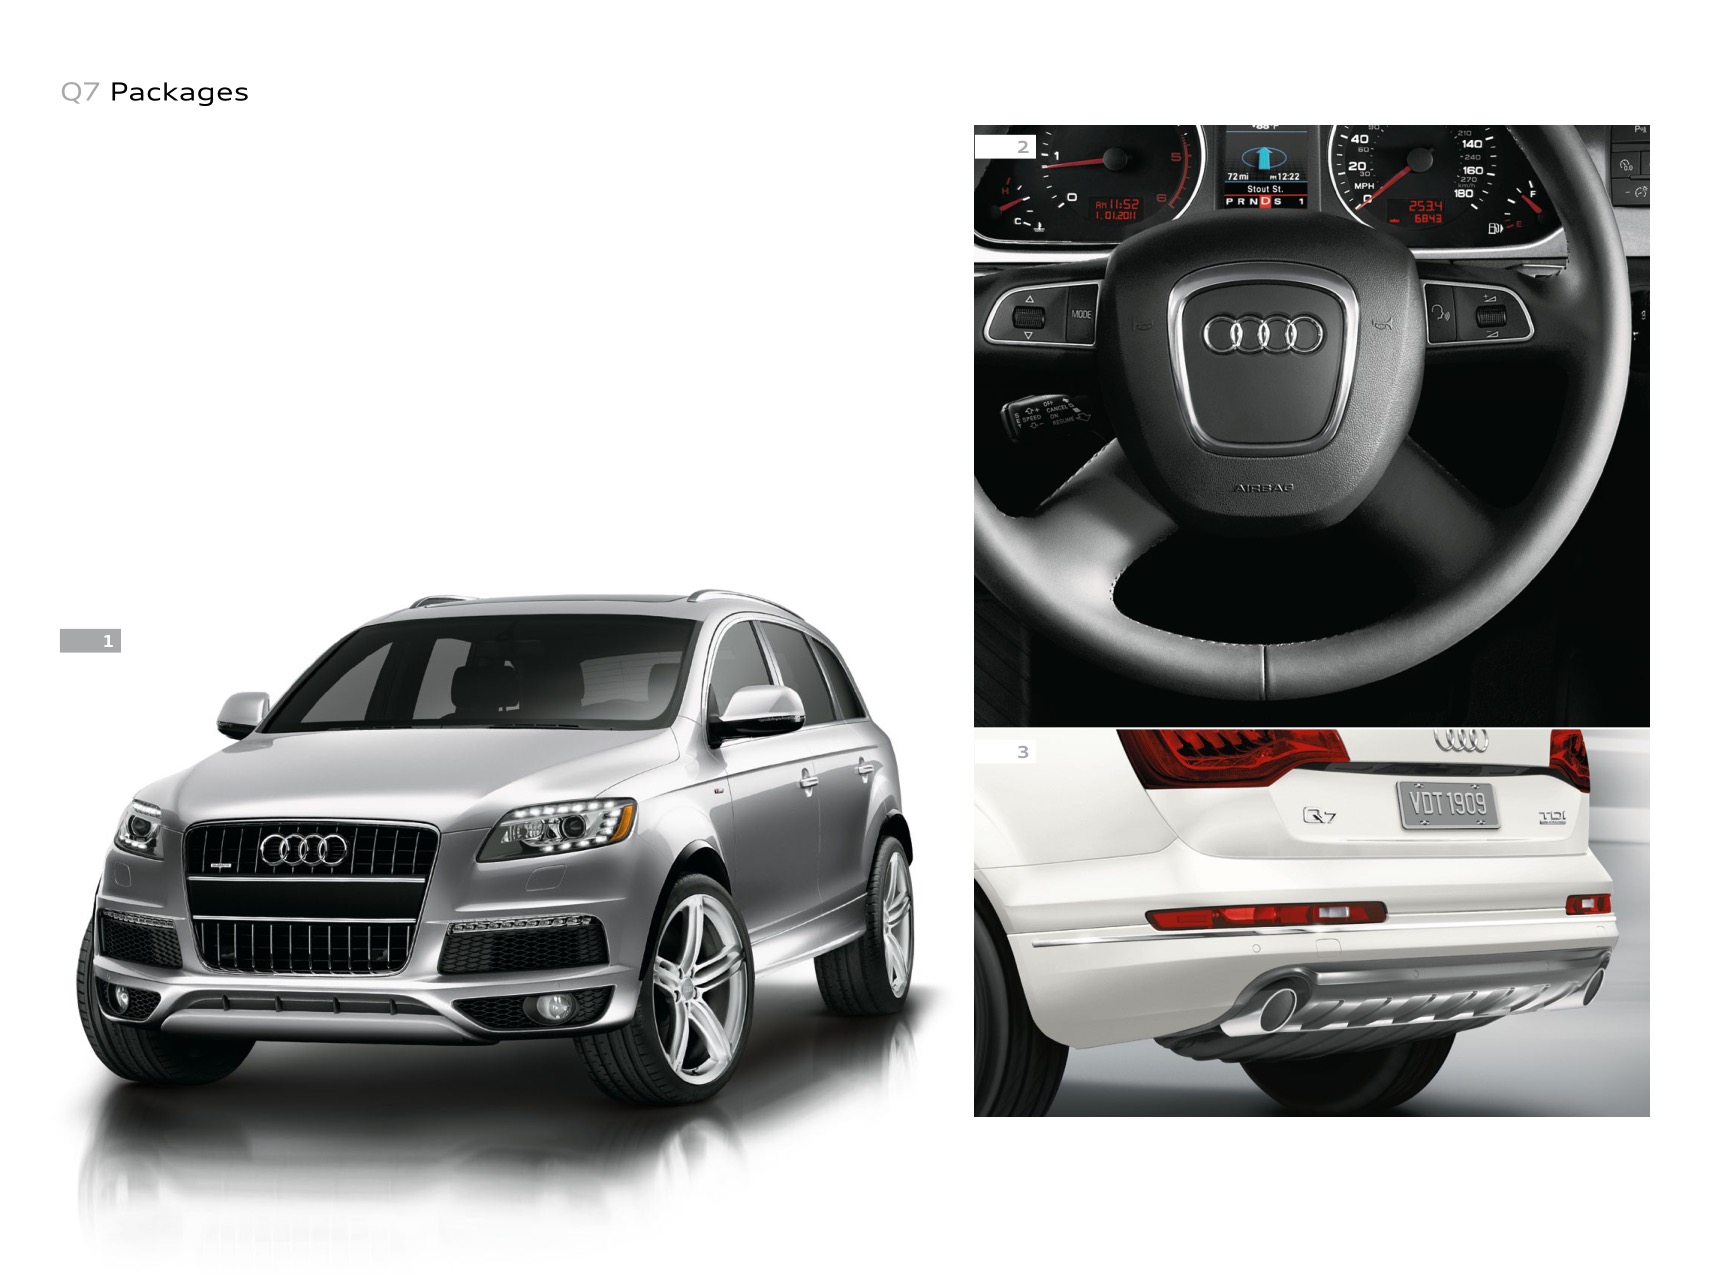 2011 Audi Q7 Brochure Page 22